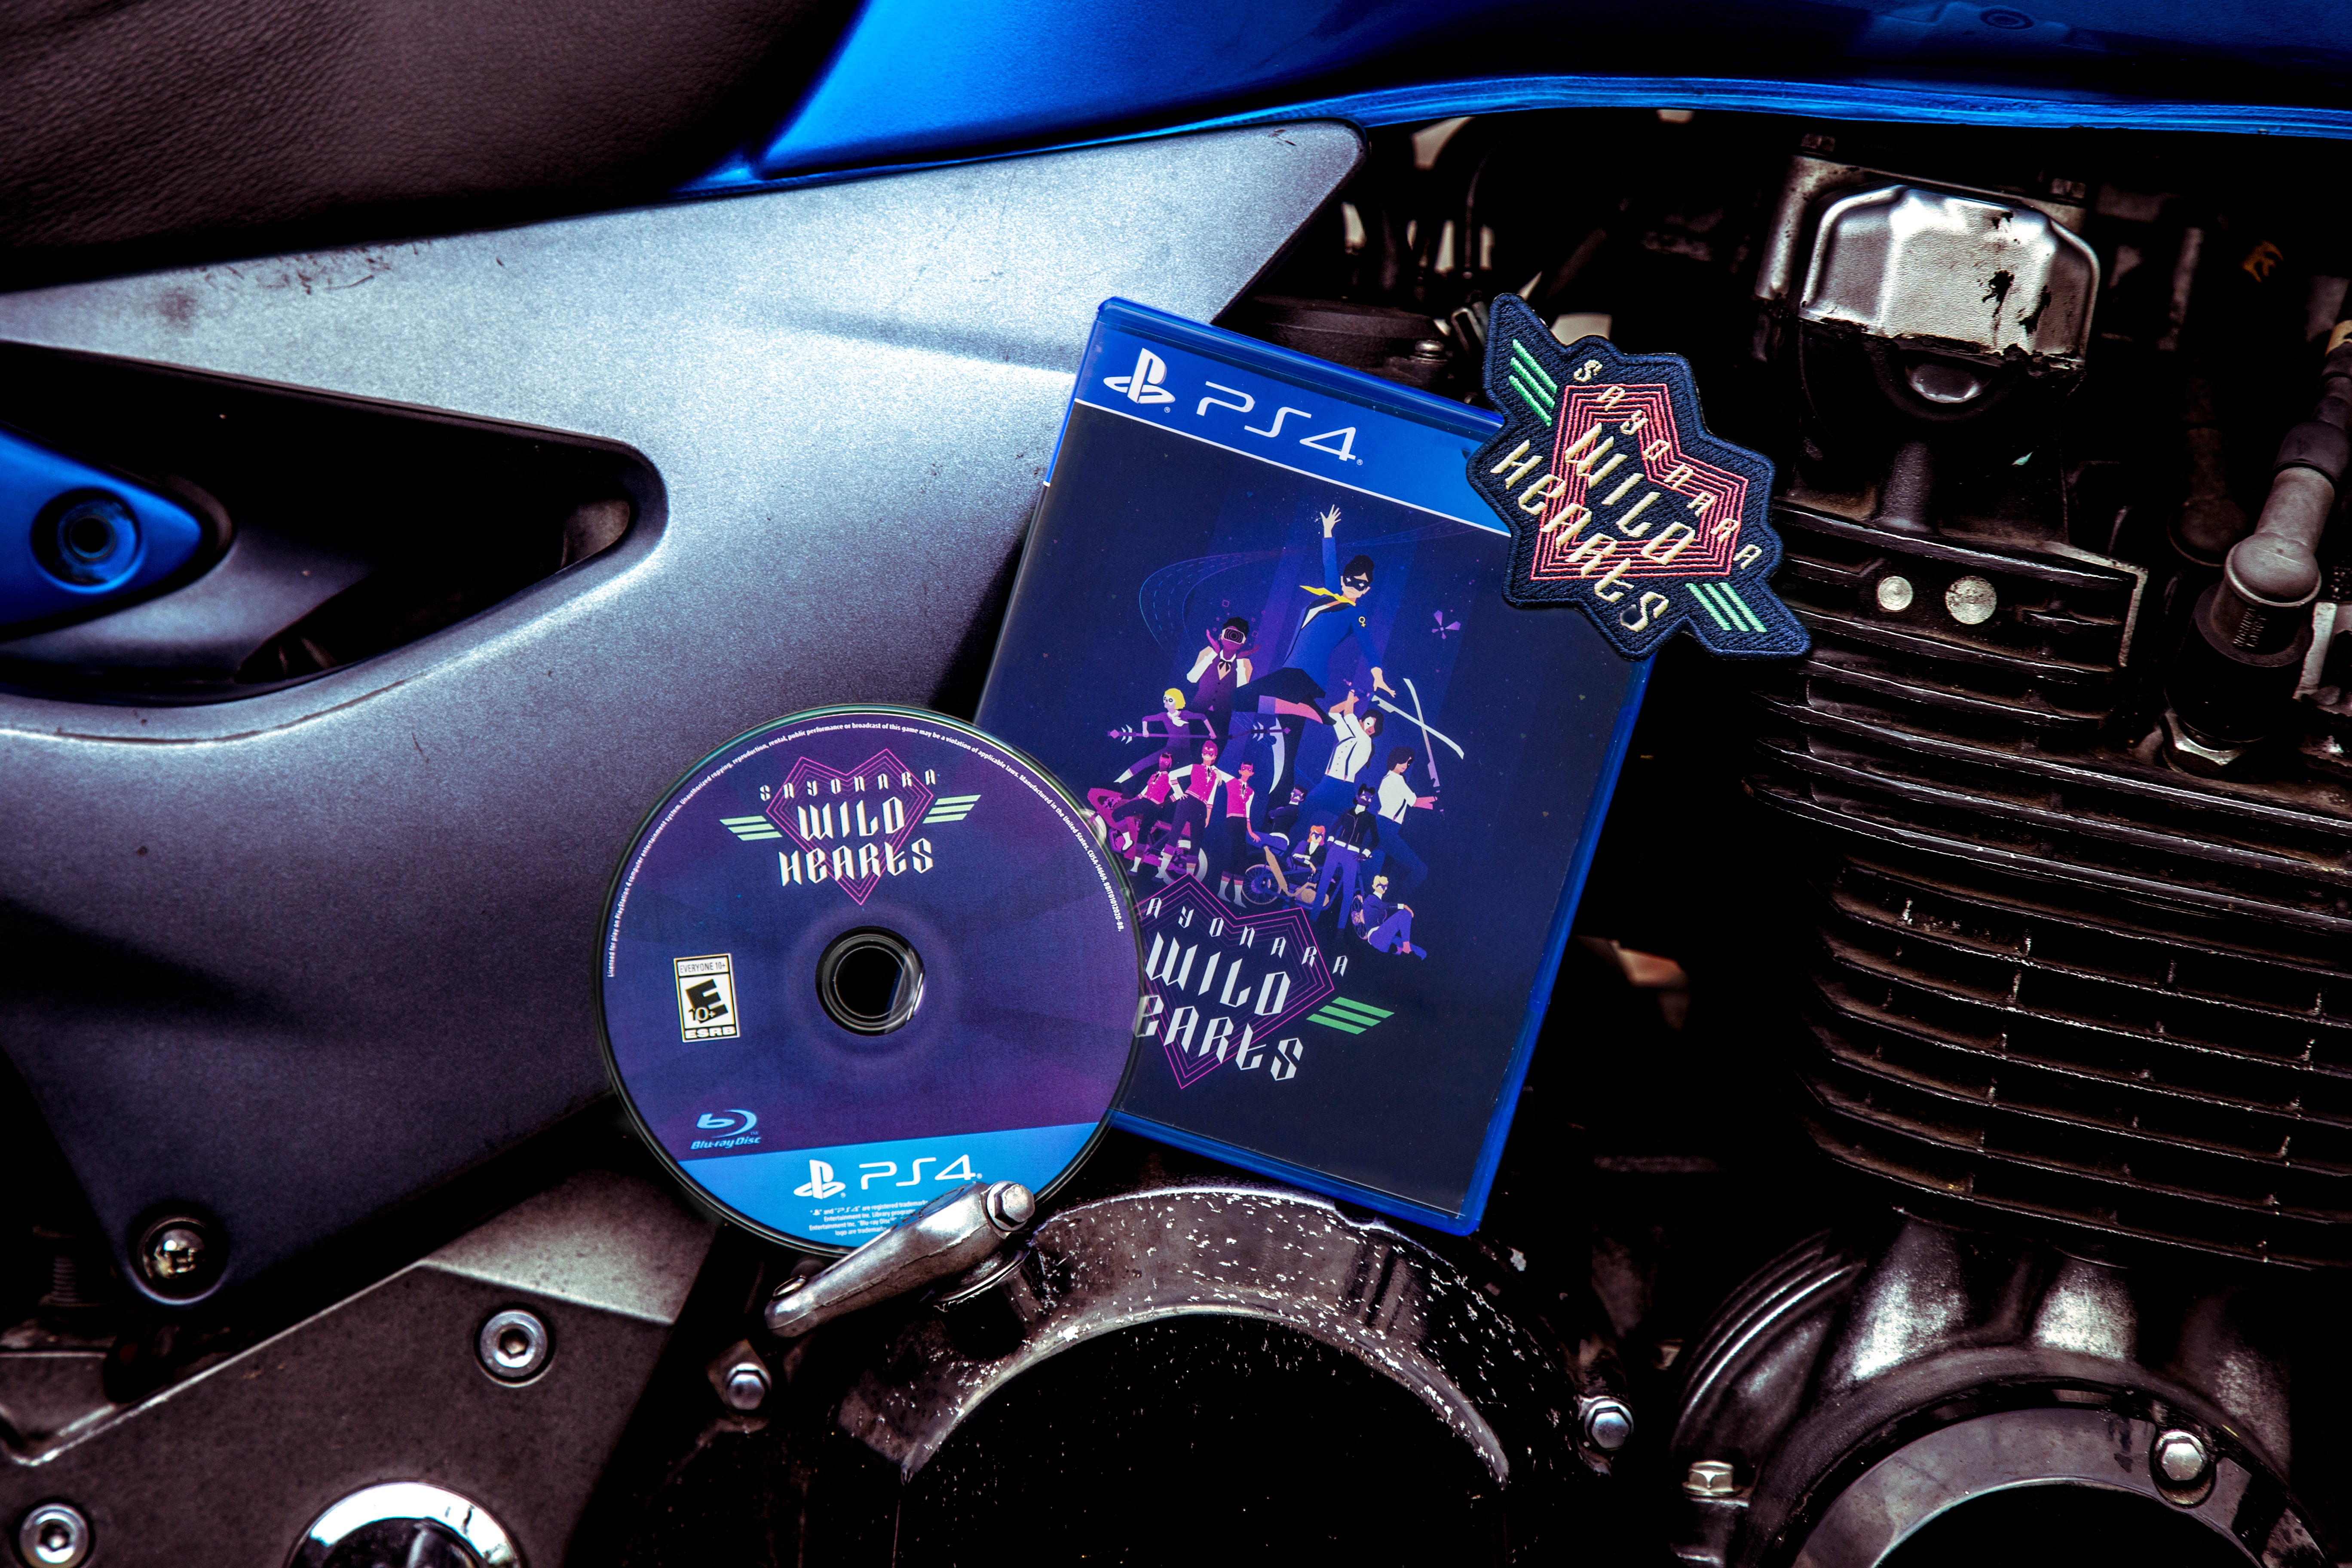 Sayonara Wild Hearts - PlayStation 4